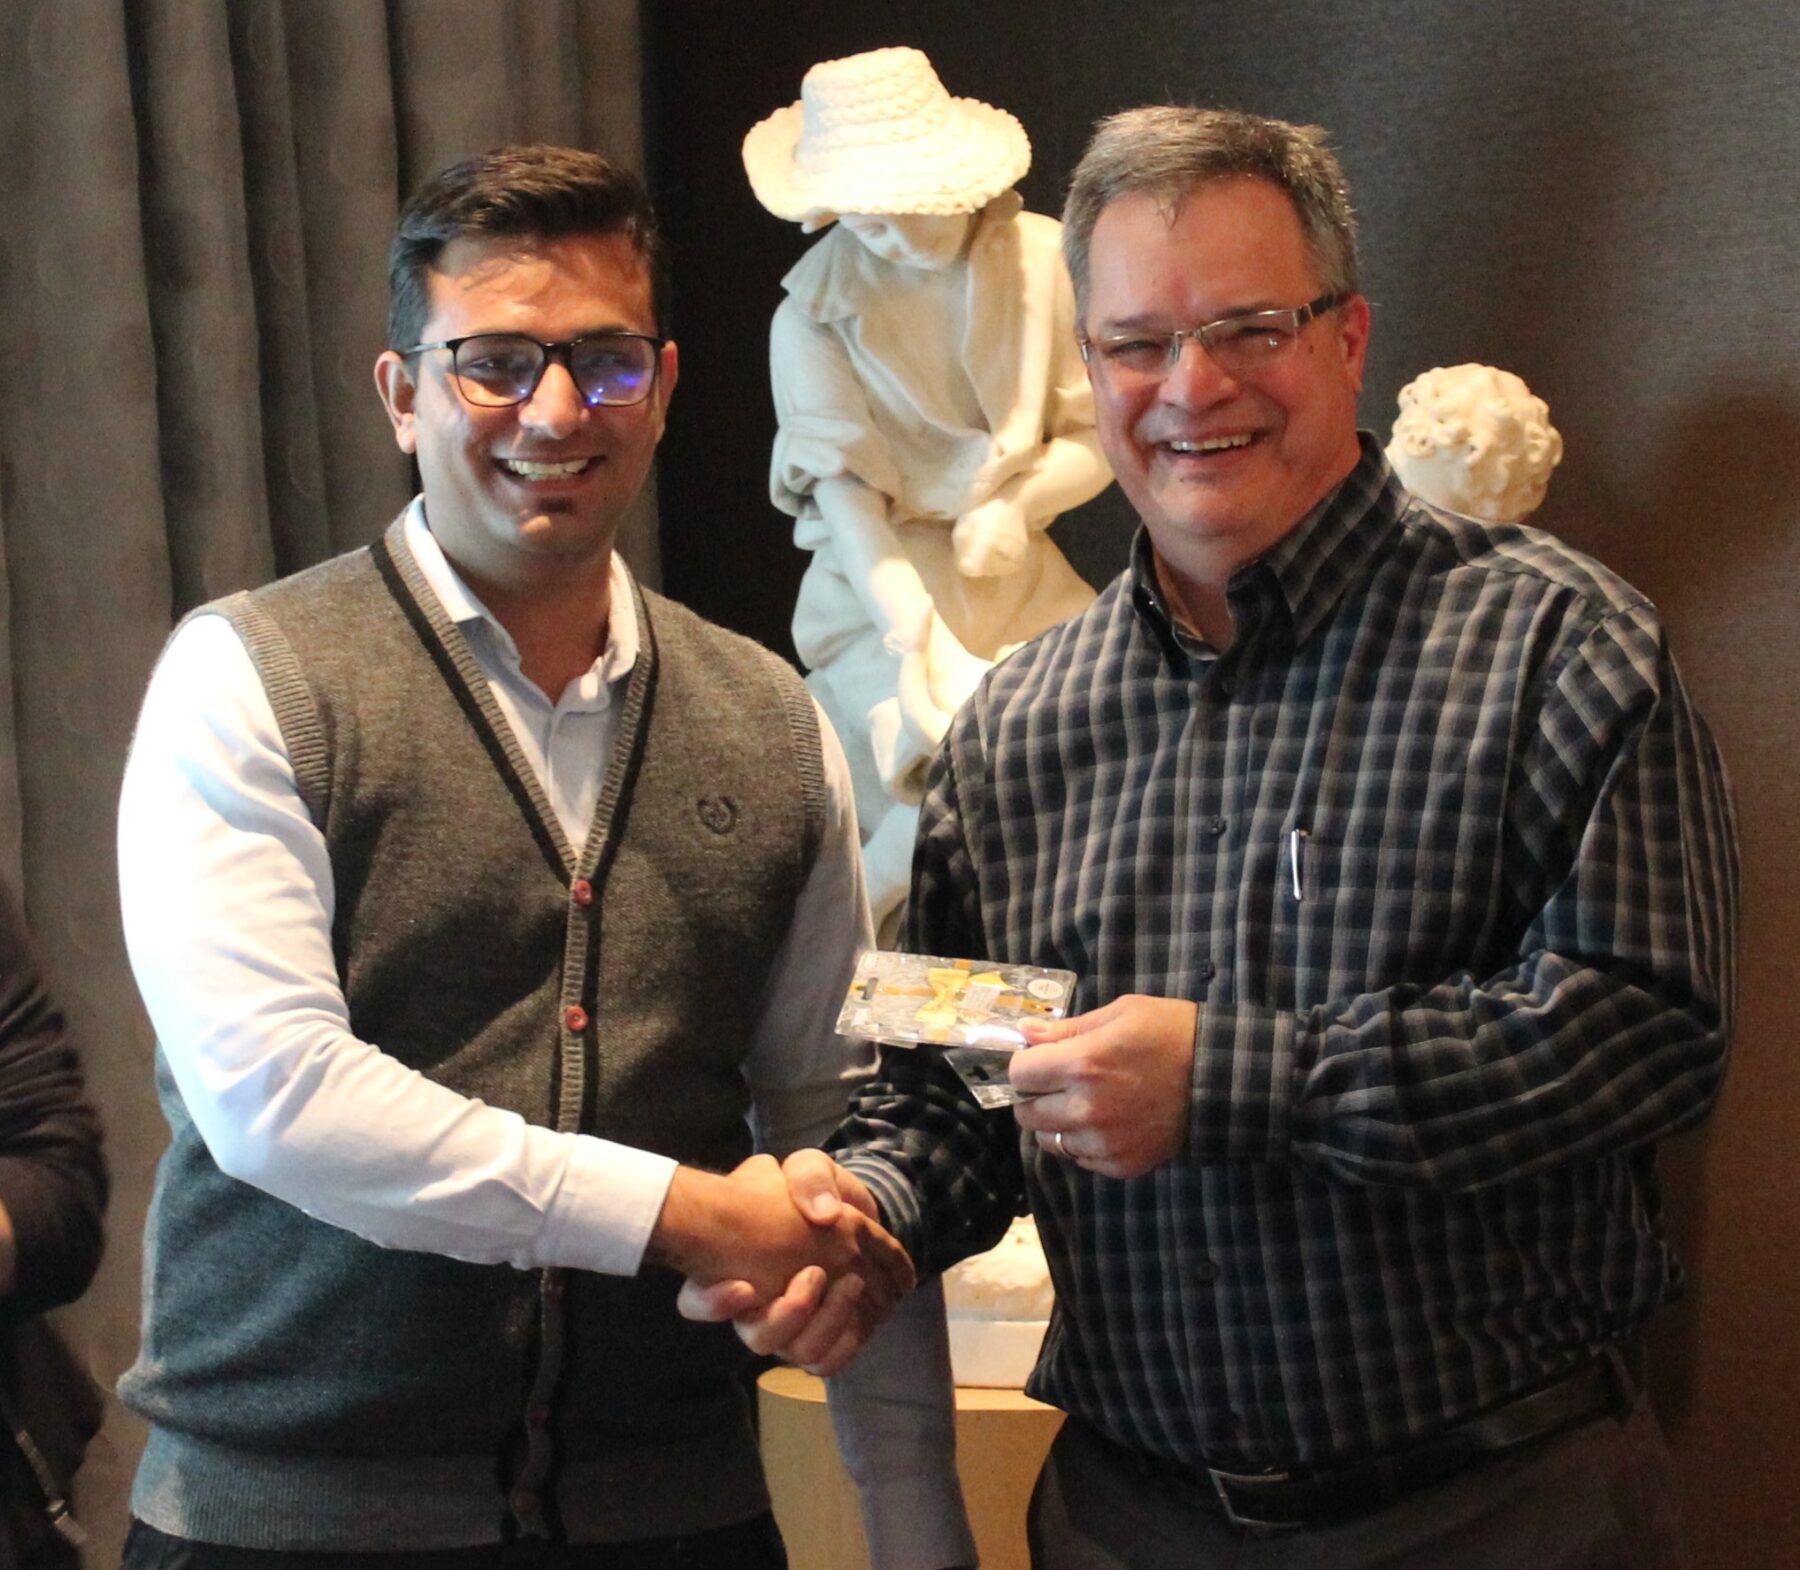 Billable Award #4 goes to Dynamics 365 Sales Consultant Ashish Rana